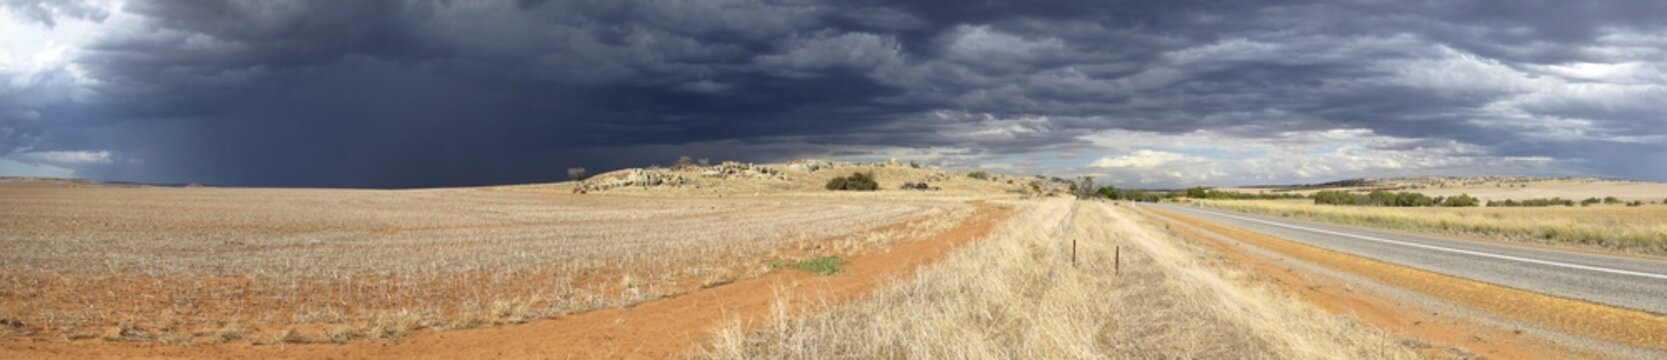 clouds at harrocks valley, western australia